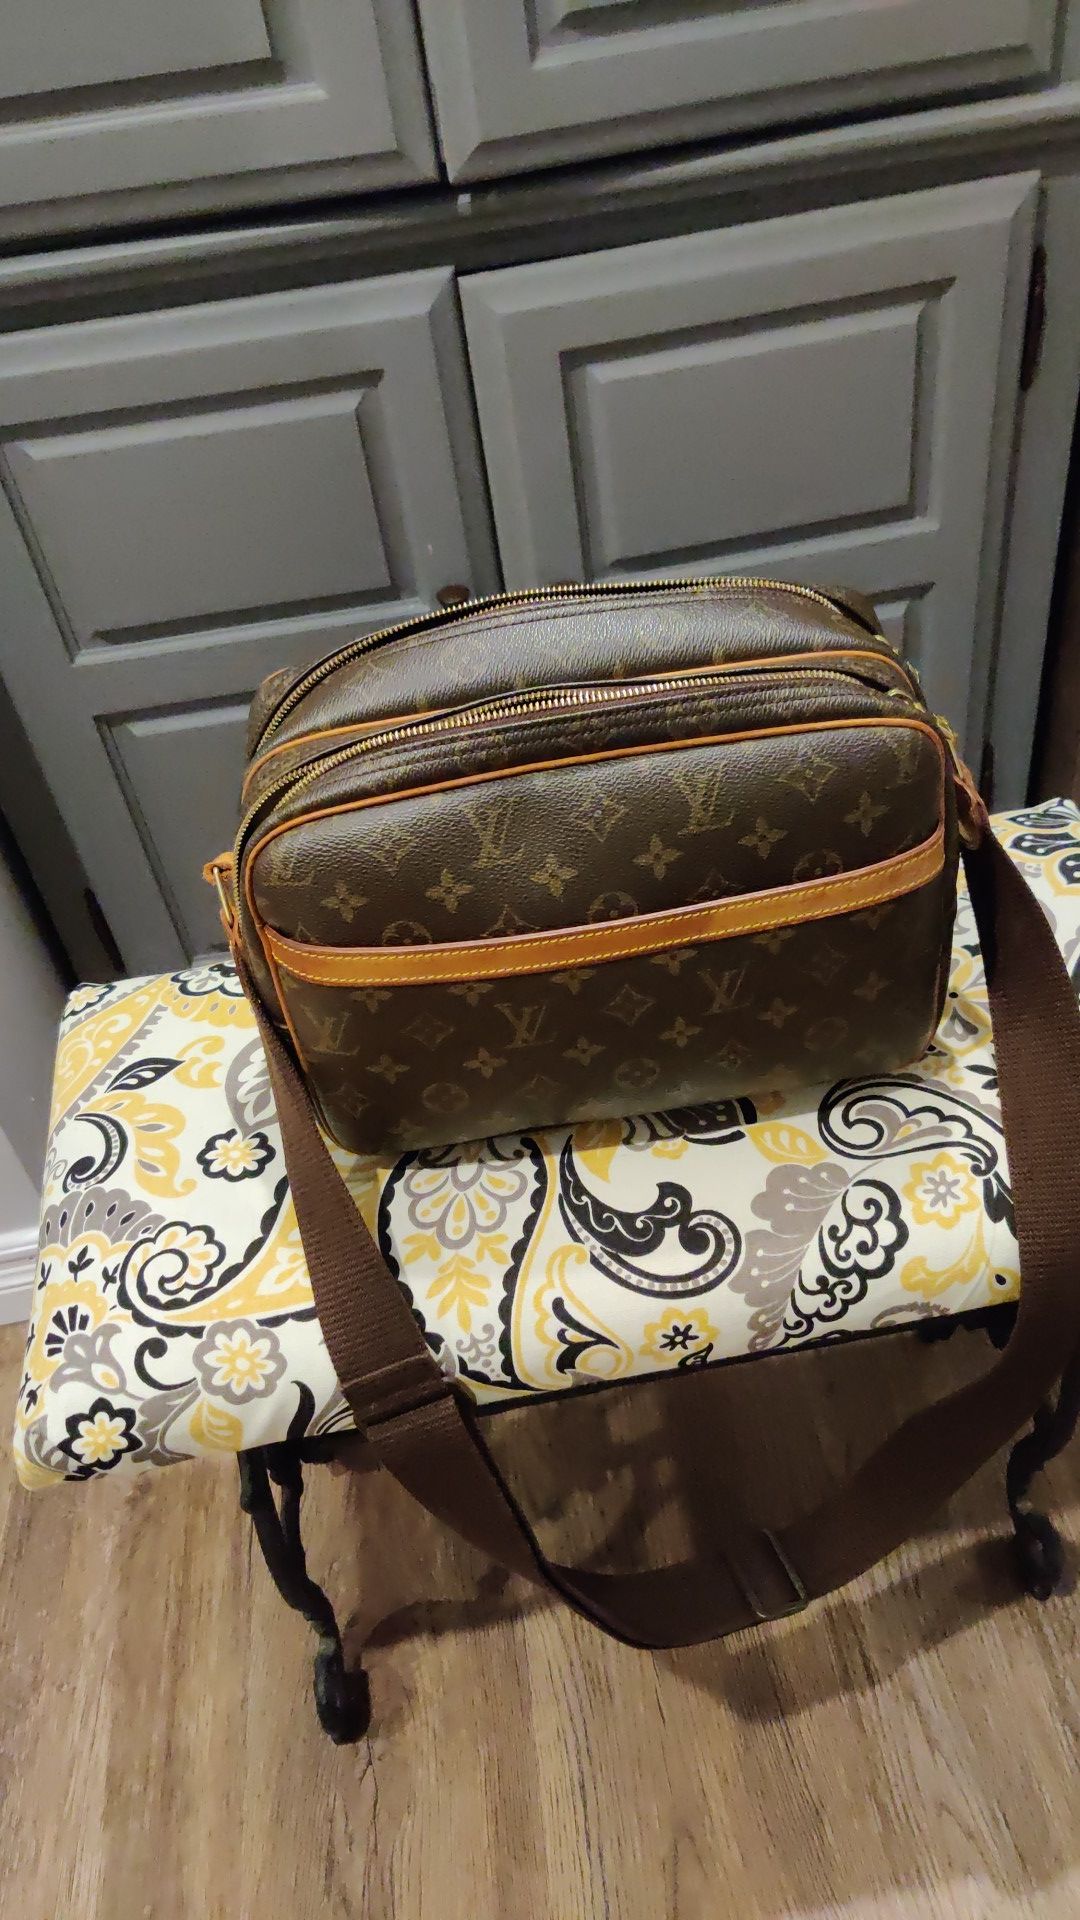 Louis Vuitton Pm bag